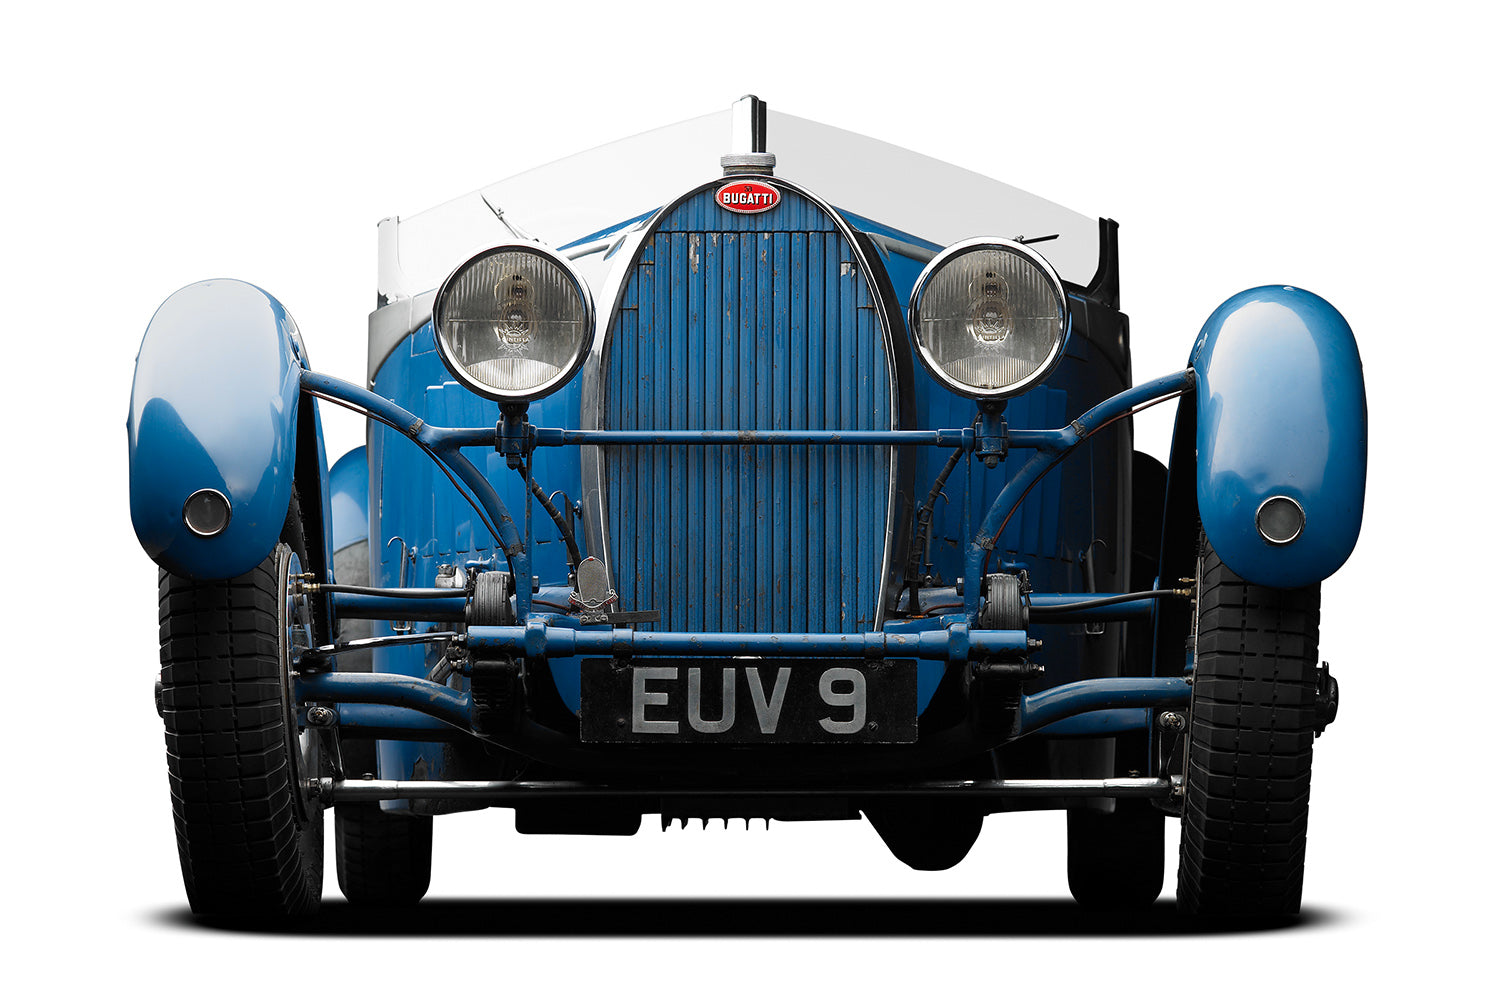 1934 Bugatti Type 57 TT - Front by Michael Furman | _freight _insale  _Season of Blue _Street Blue Michael Furman Photograph